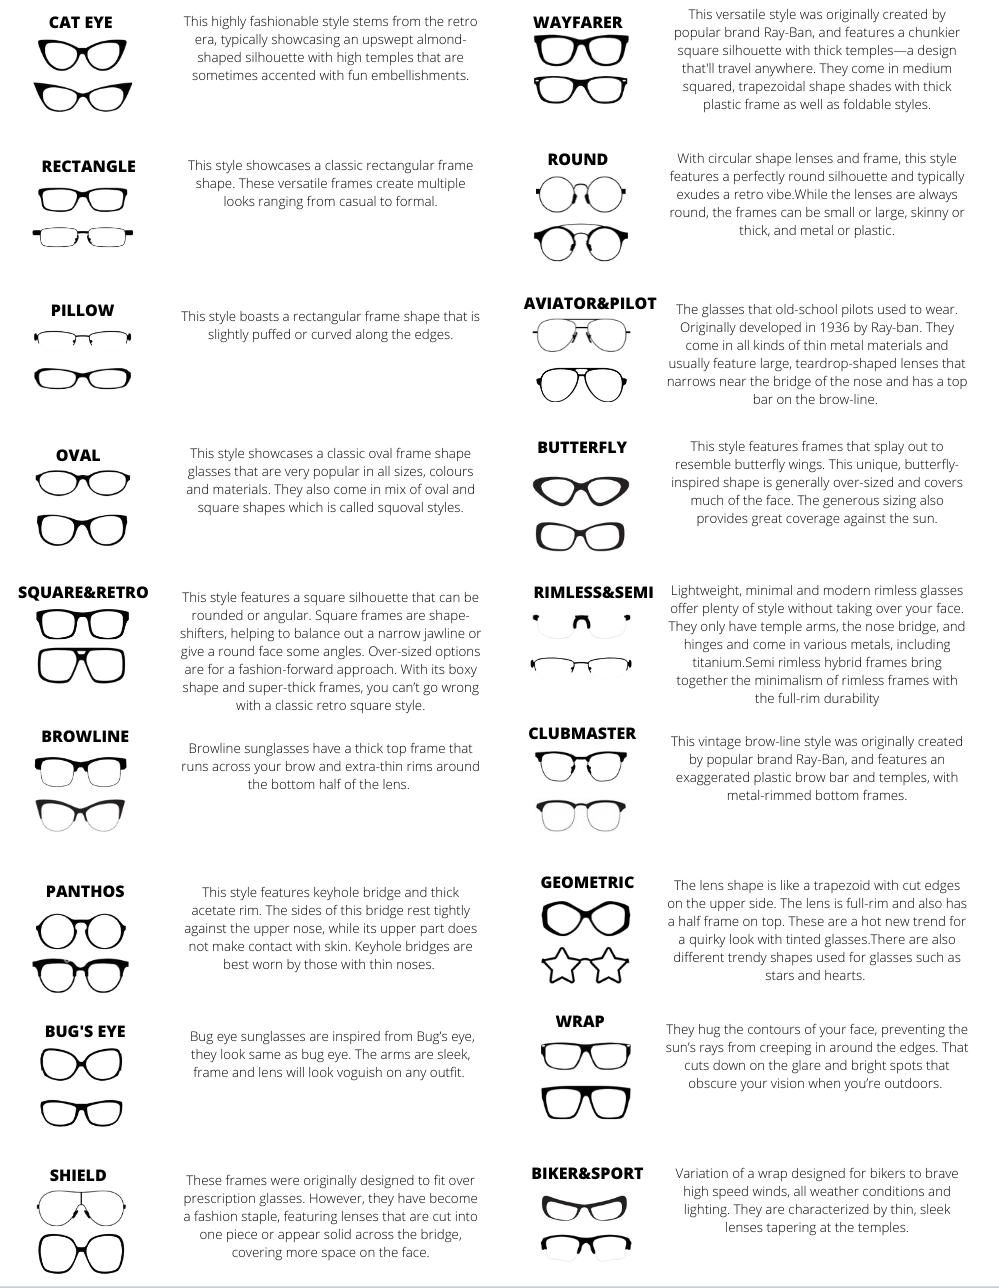 Types of frames